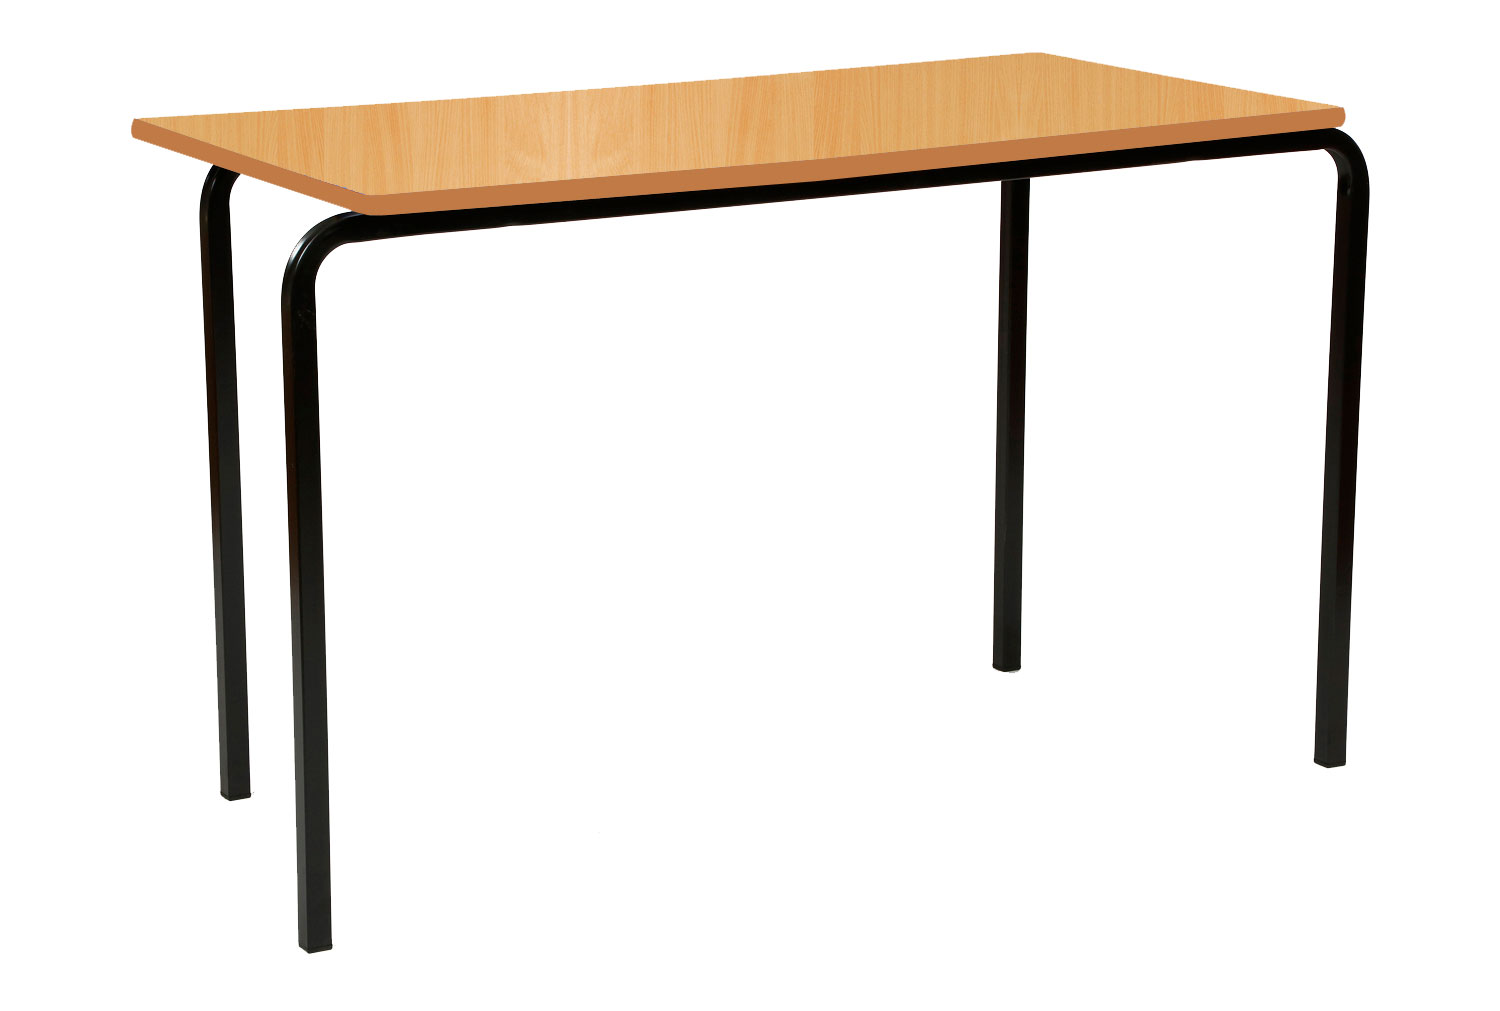 Qty 6 - Educate Crush Bent Rectangular Classroom Table 14+ Years (MDF Edge), 120wx60dx76h (cm), Black Frame, Beech Top